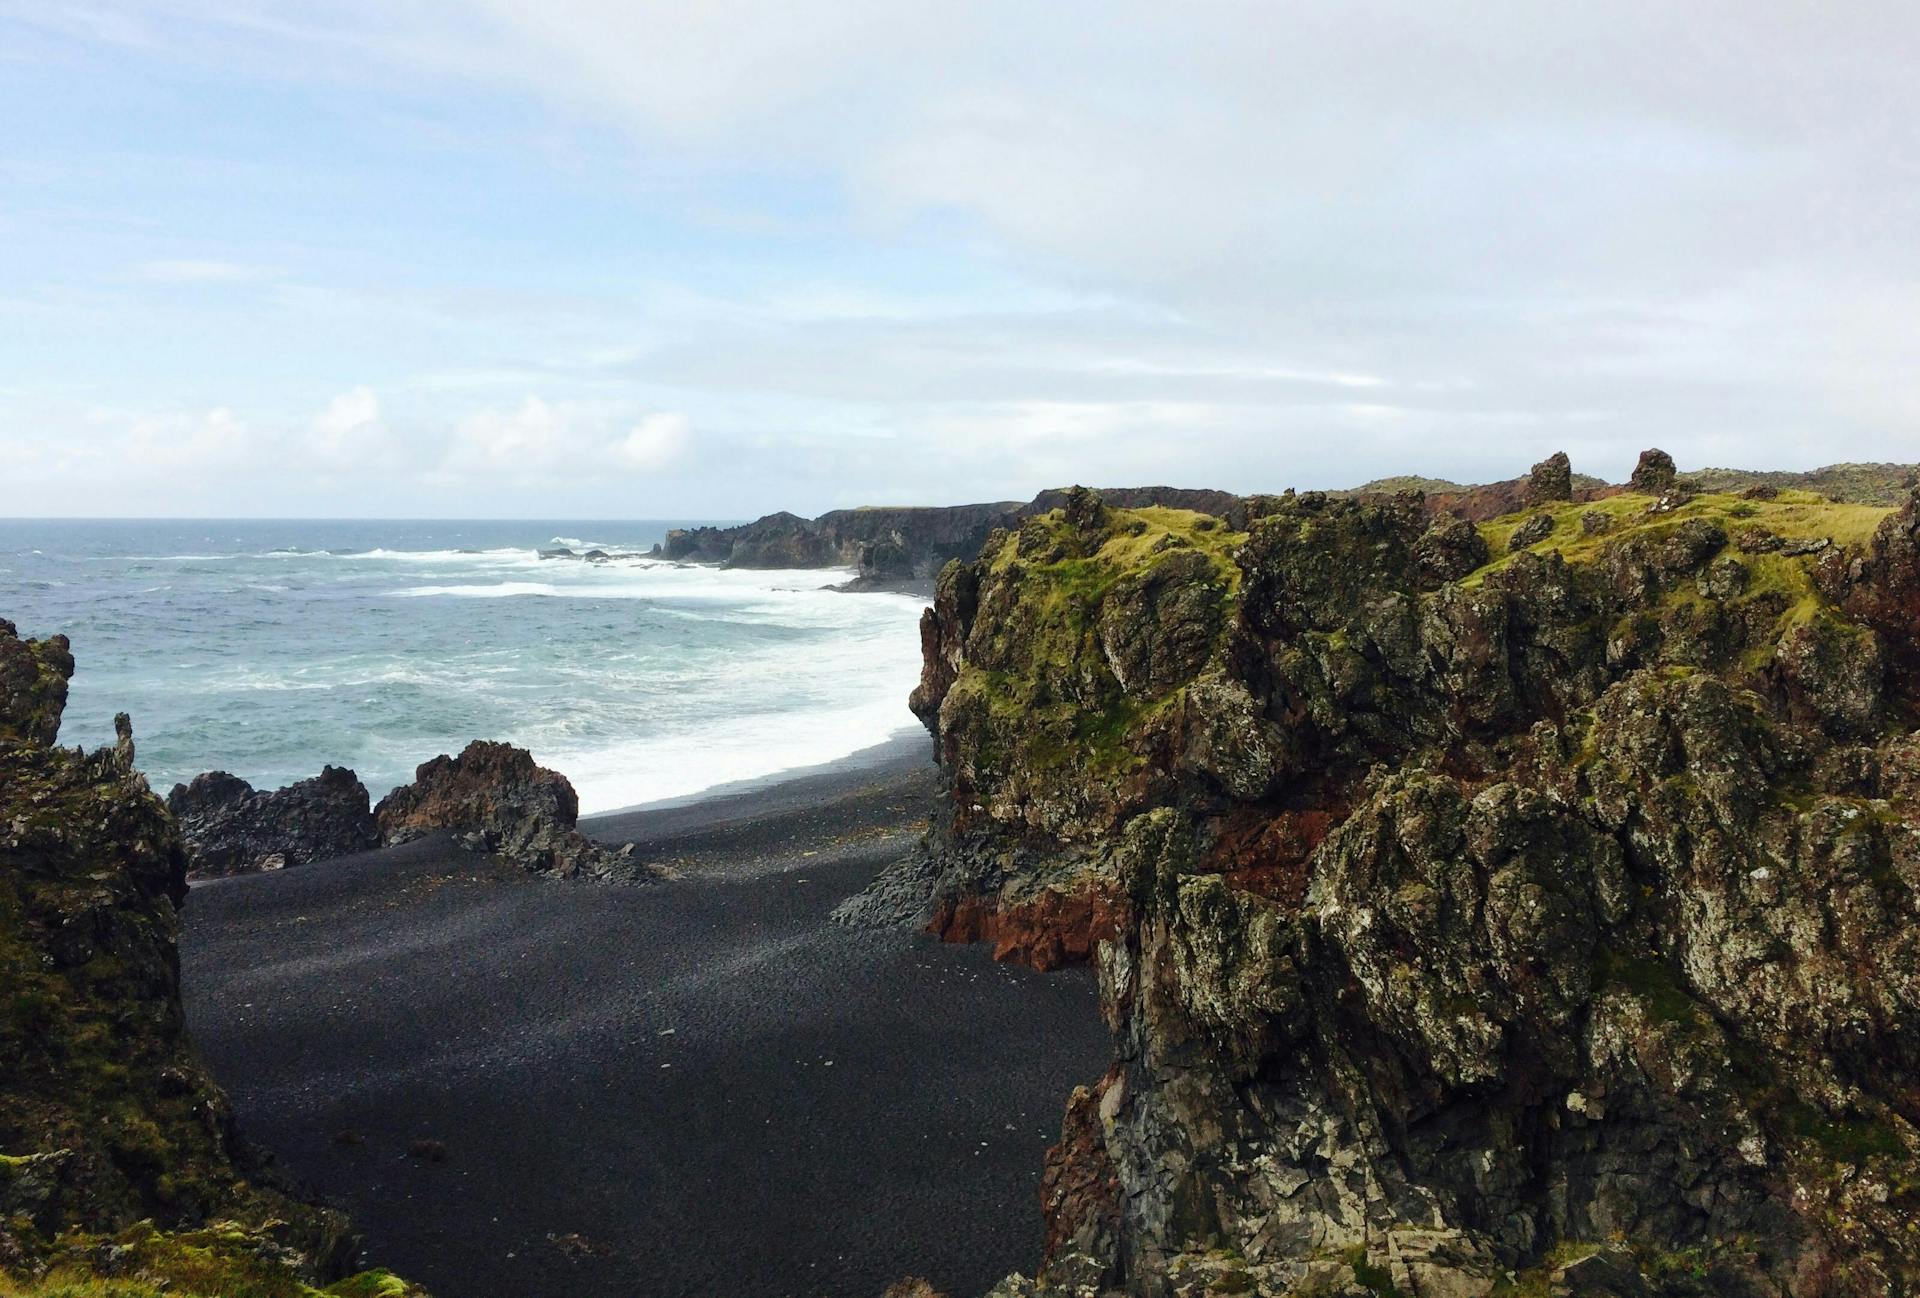 Djupalonssandur black beach in Snaefellsnes peninsula, west Iceland. 